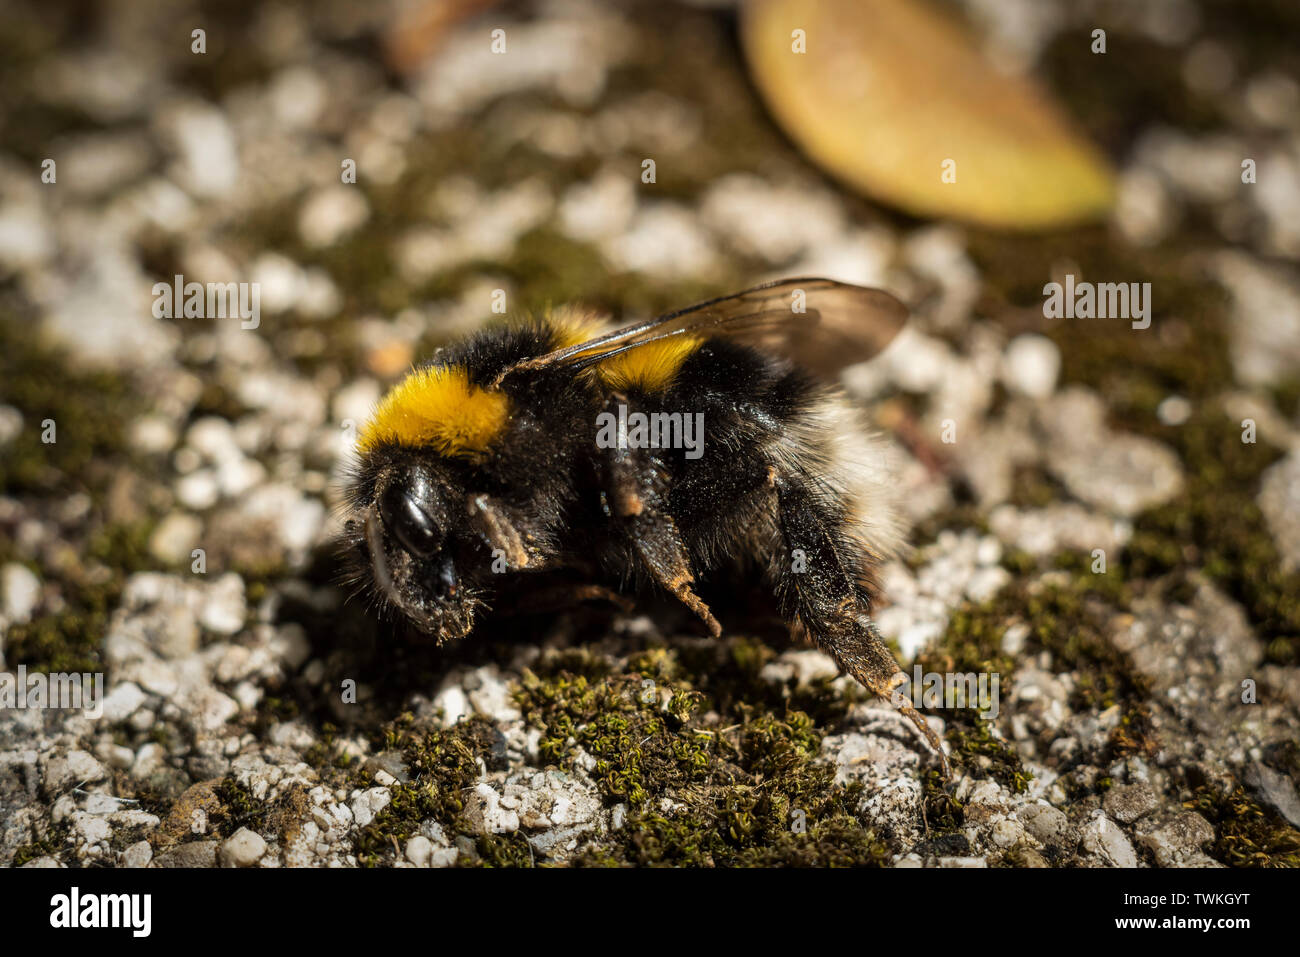 Dead Bumblebee on rocky ground Stock Photo